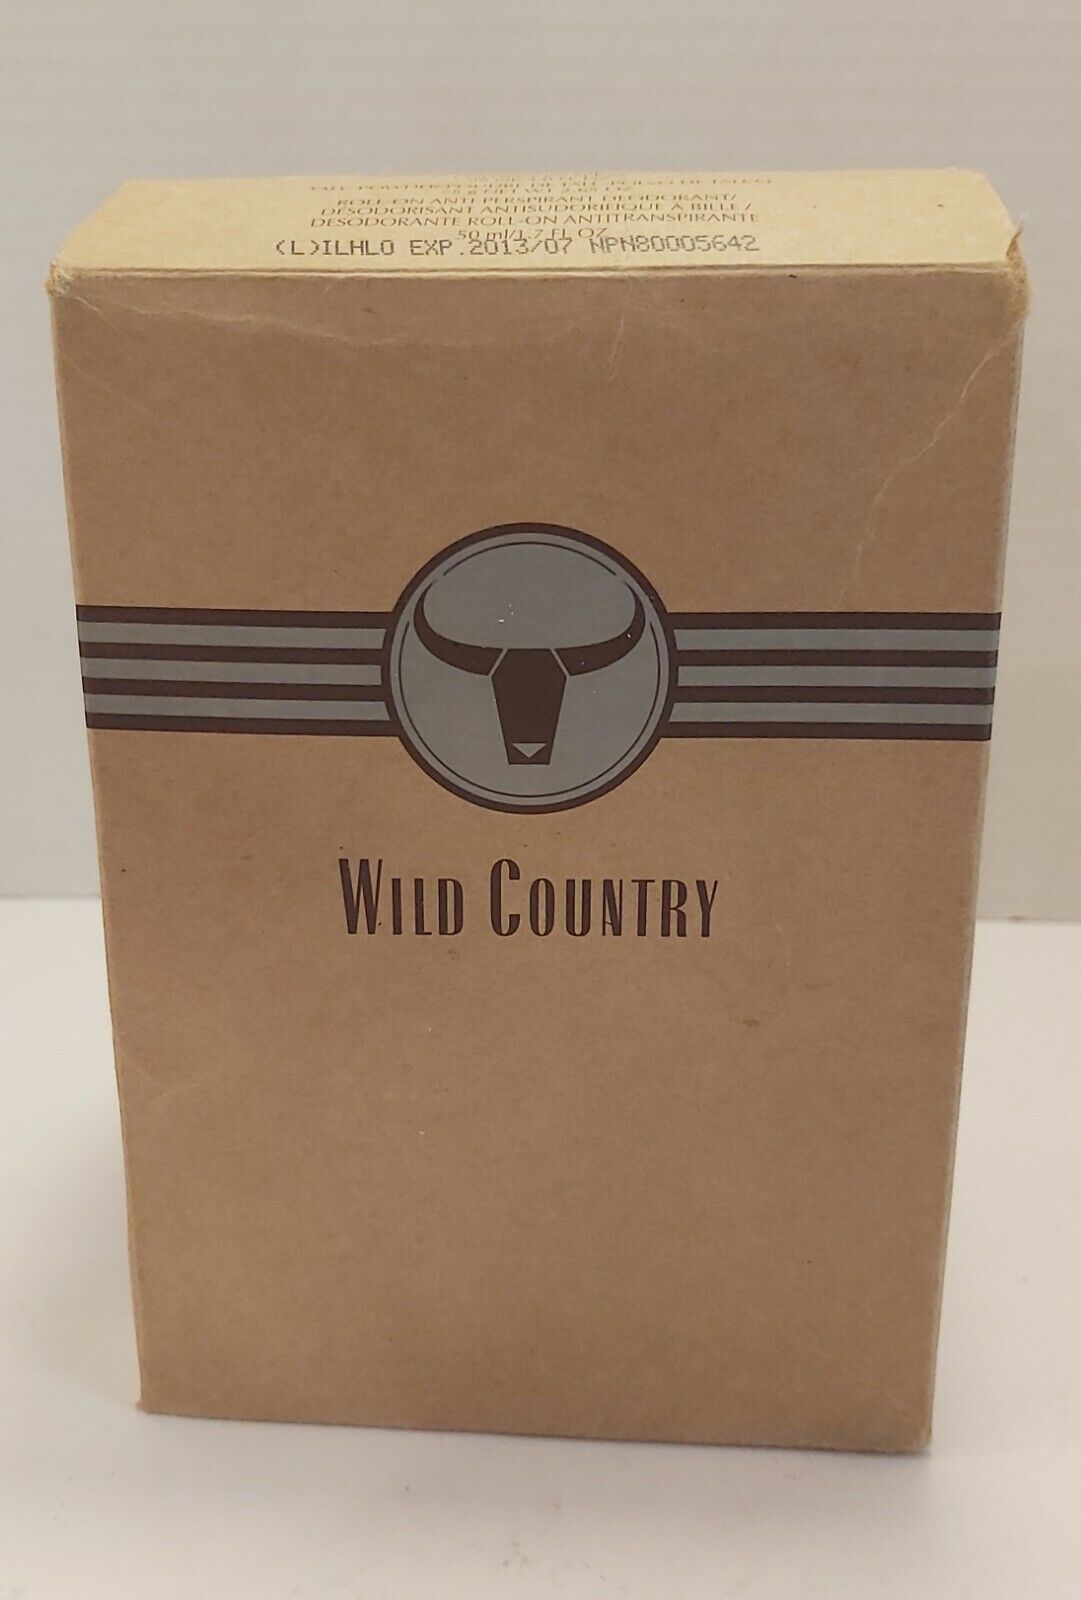 2010 Avon Wild Country 3 Piece Gift Set NOS - $23.22